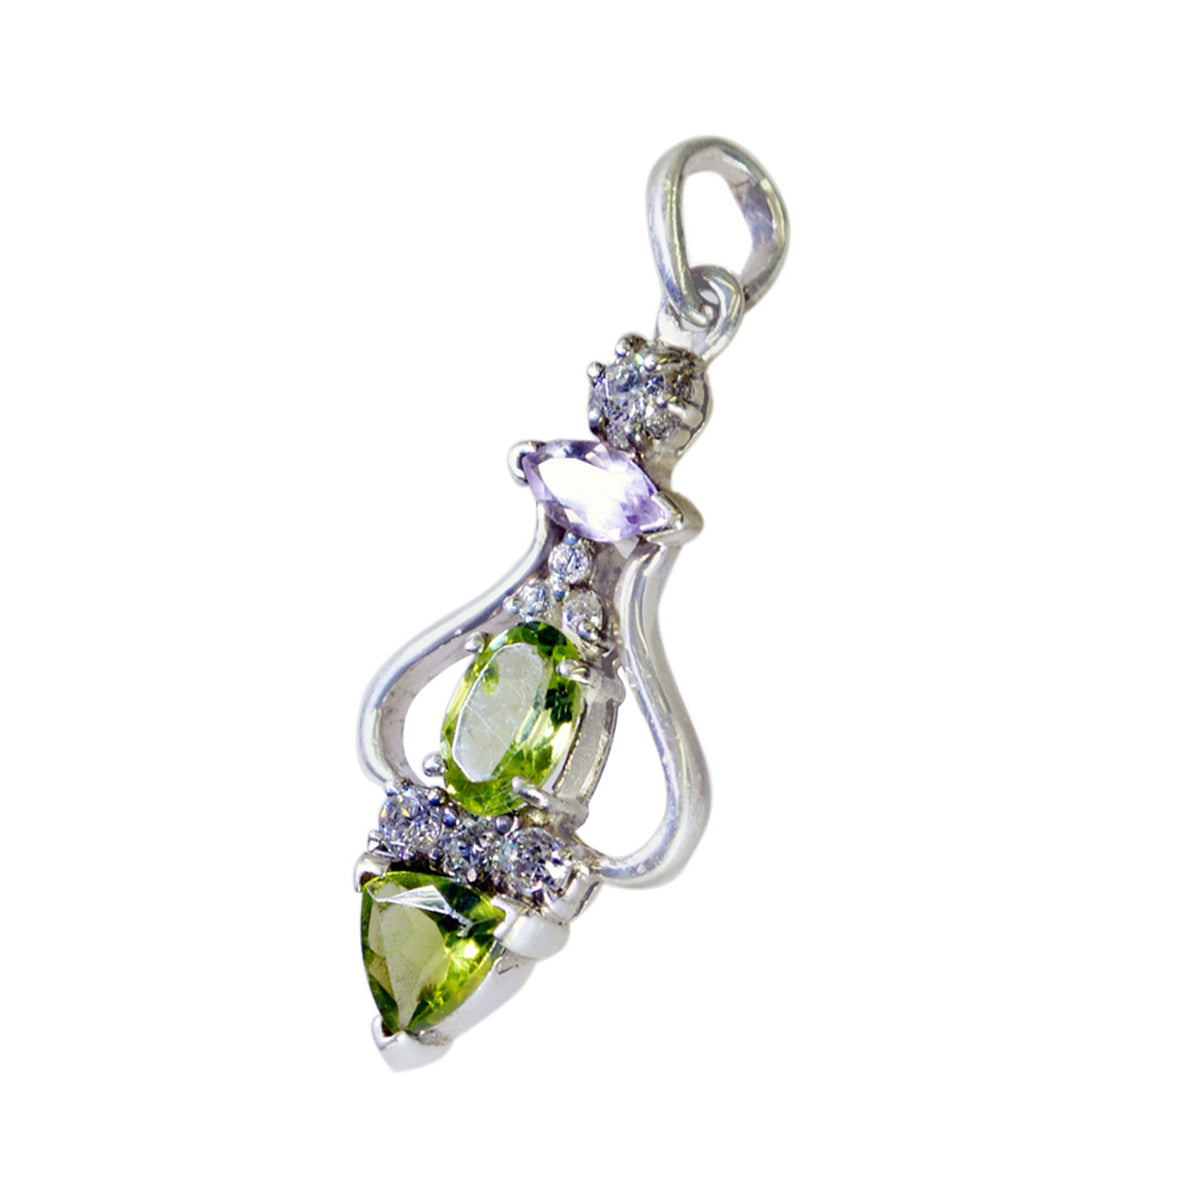 Riyo Ravishing Gemstone Multi Faceted Green Peridot Sterling Silver Pendant Gift For Friend